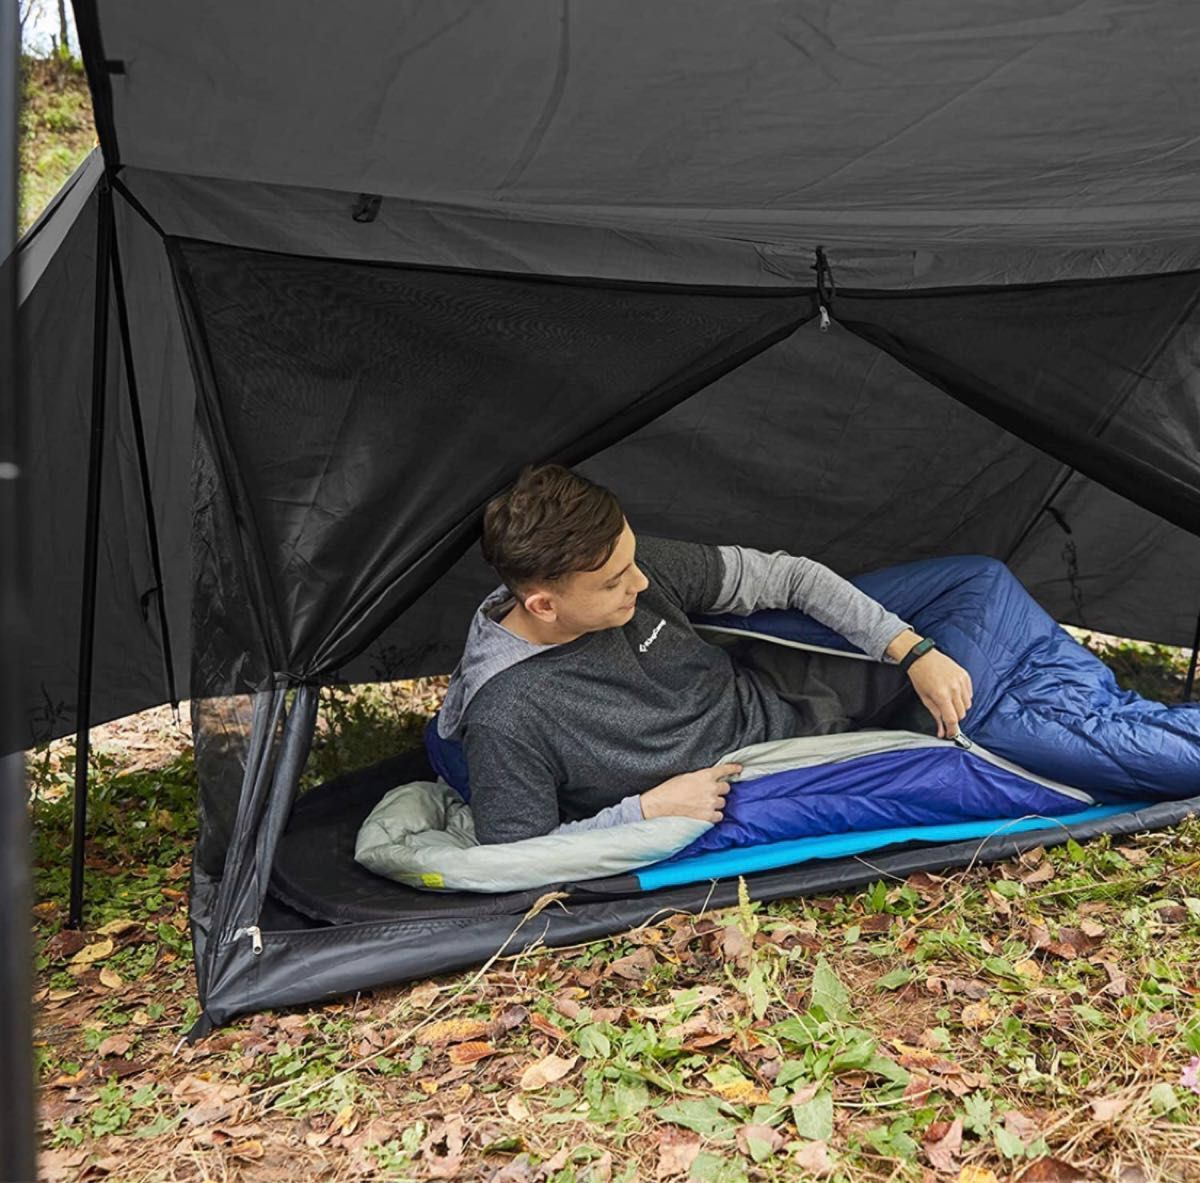 ATEPA パップテント 軍幕テント 簡易 ソロテント 1~2人用 耐水 テント キャンプ アウトドア